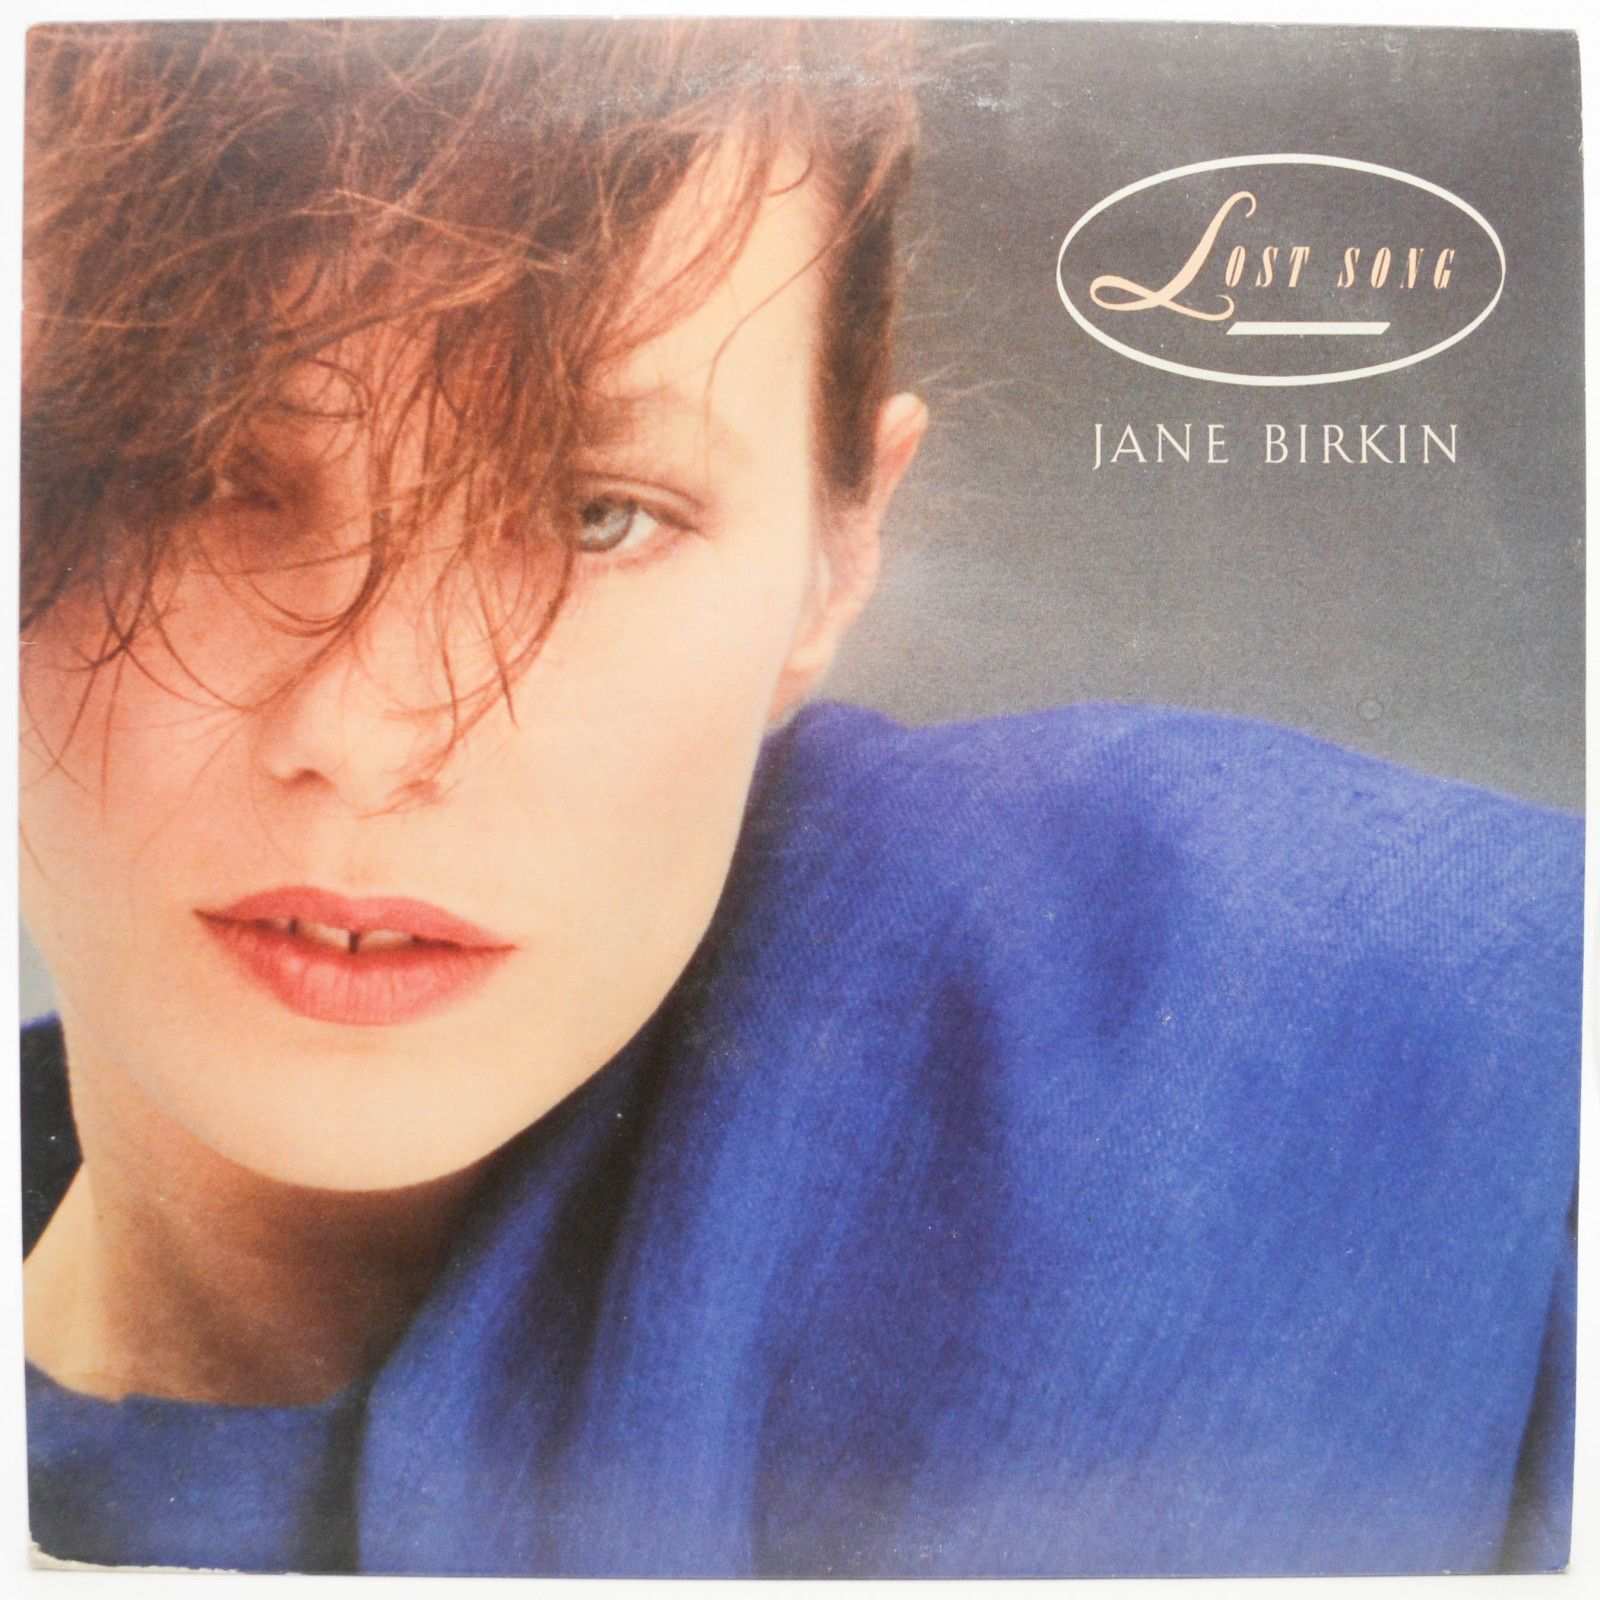 Jane Birkin — Lost Song (1-st, France), 1987